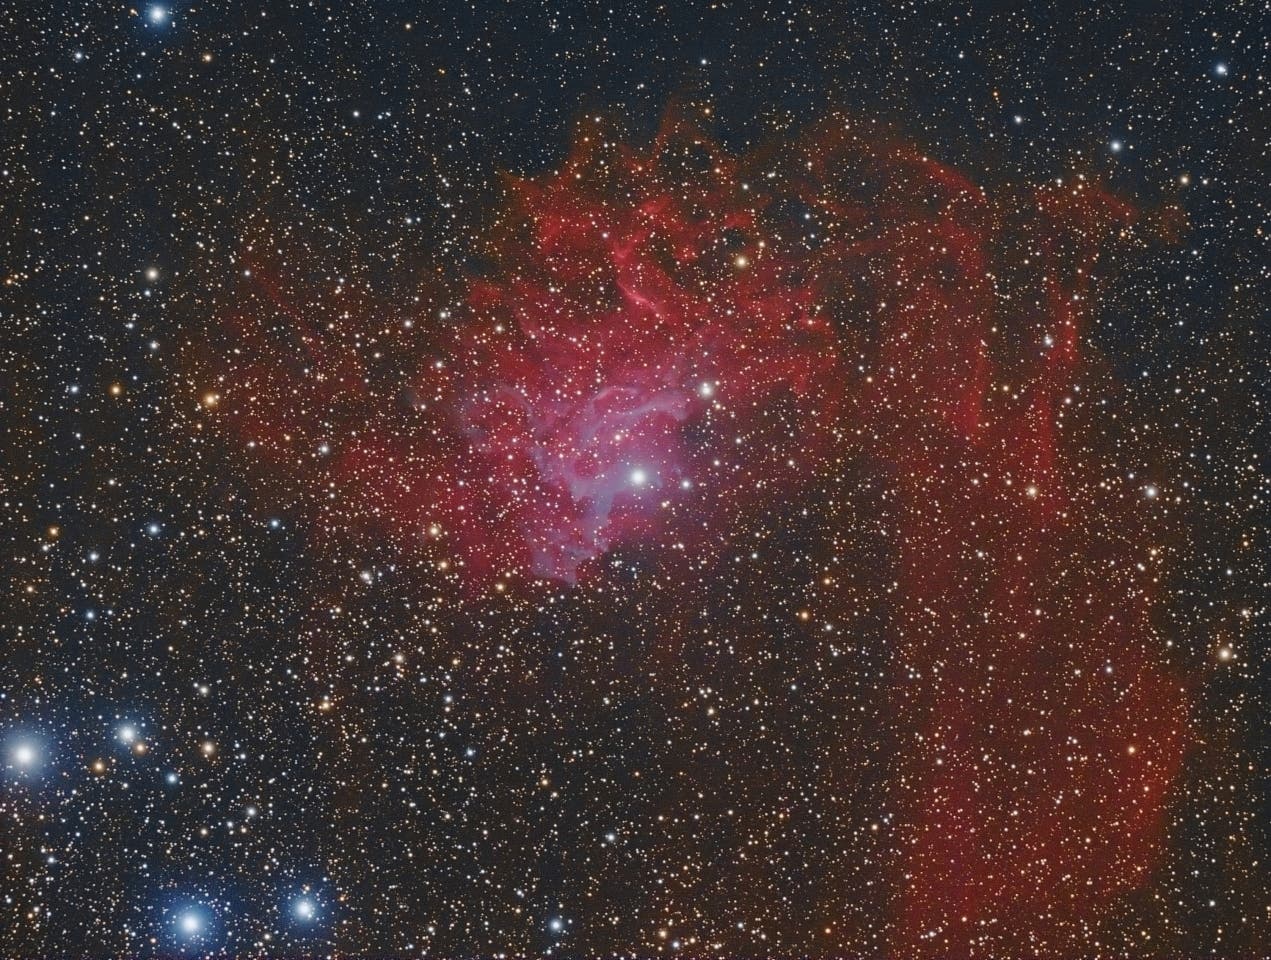 Flaming Star Nebula IC 405